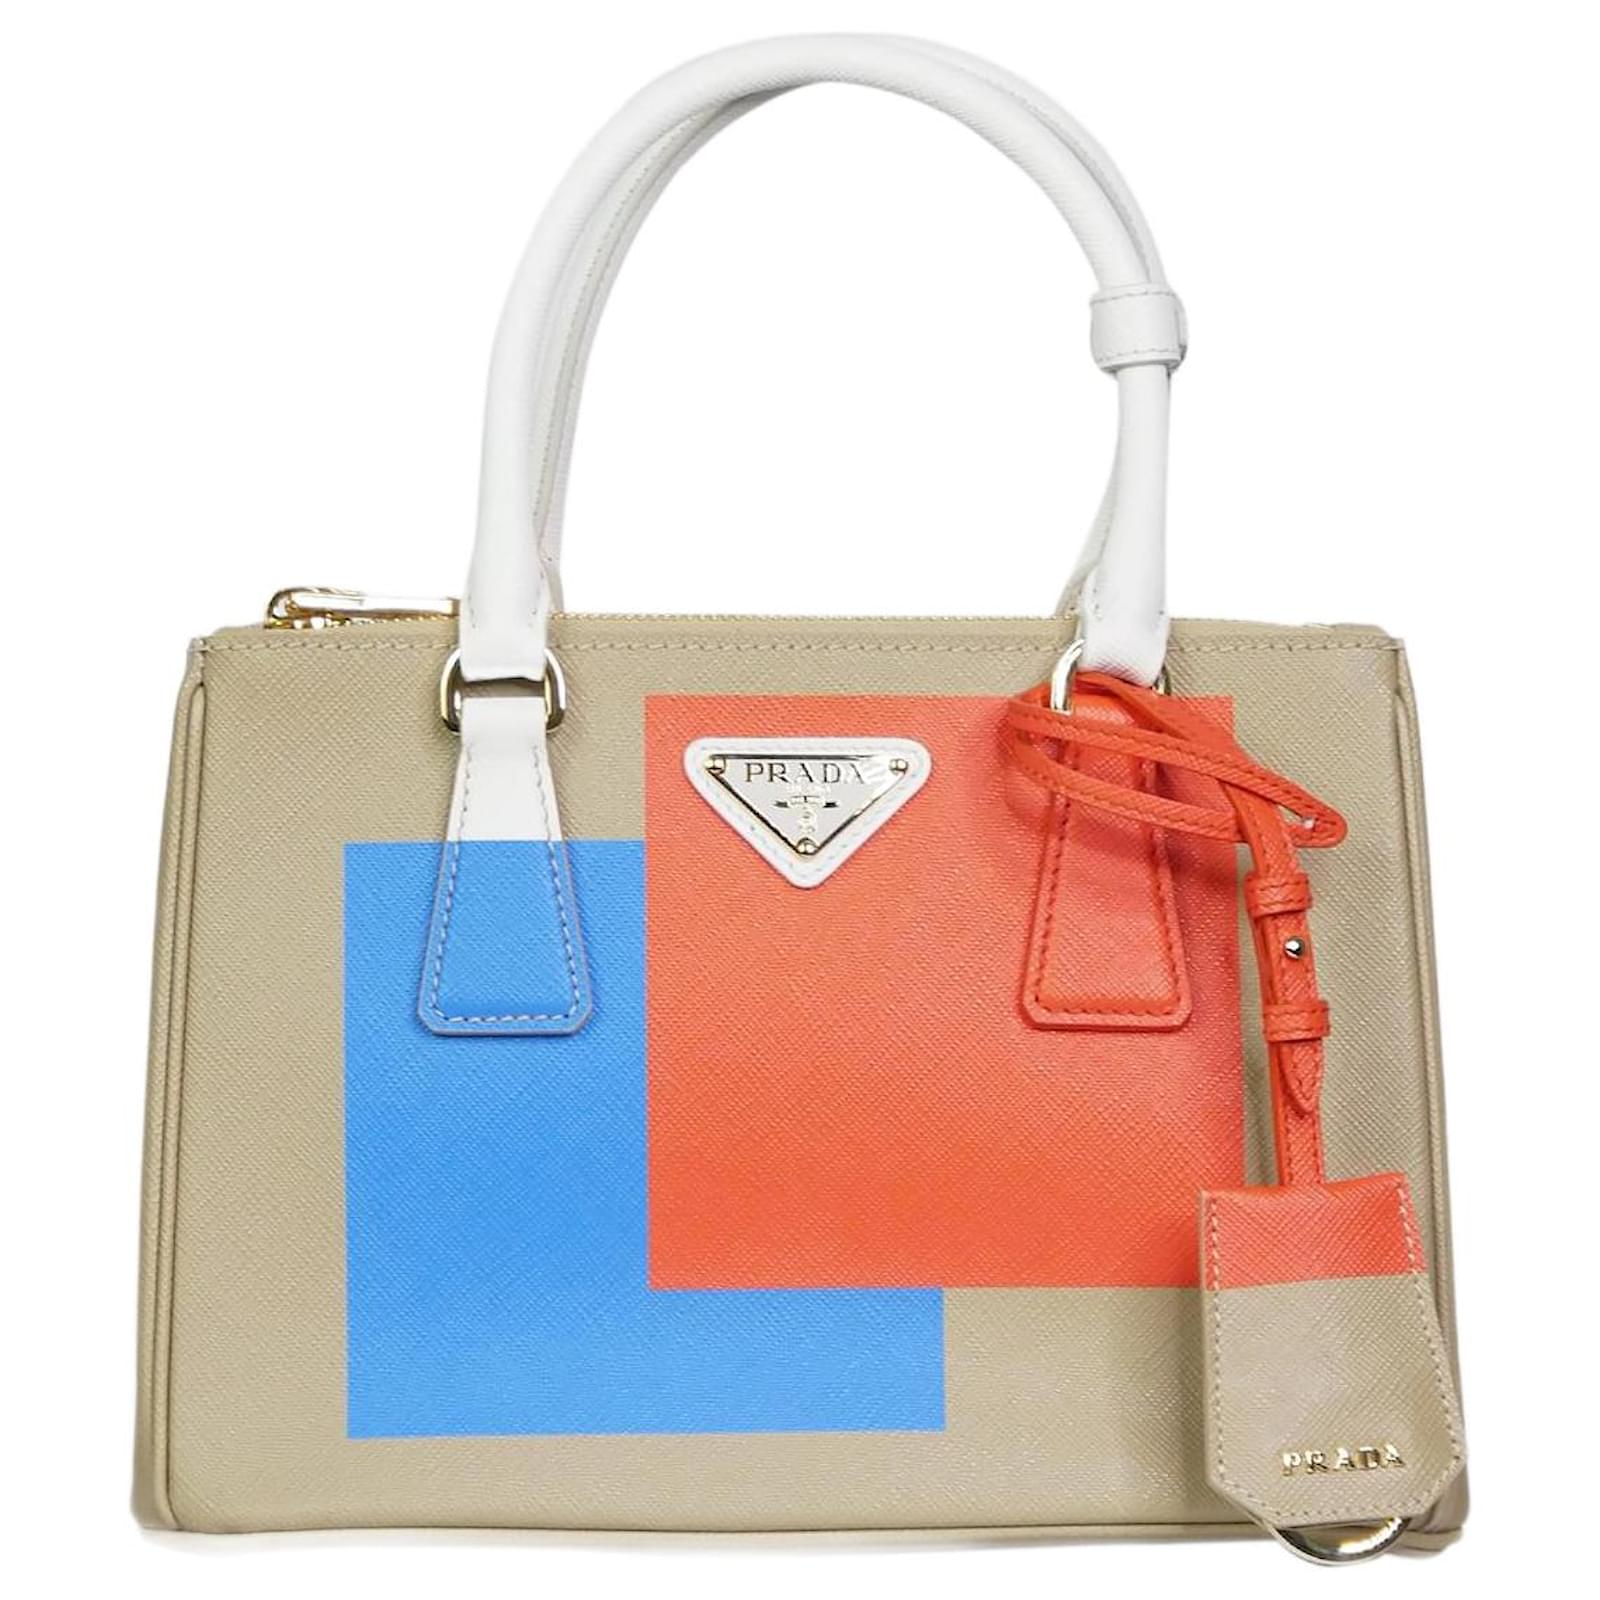 Galleria saffiano leather mini-bag | Prada 